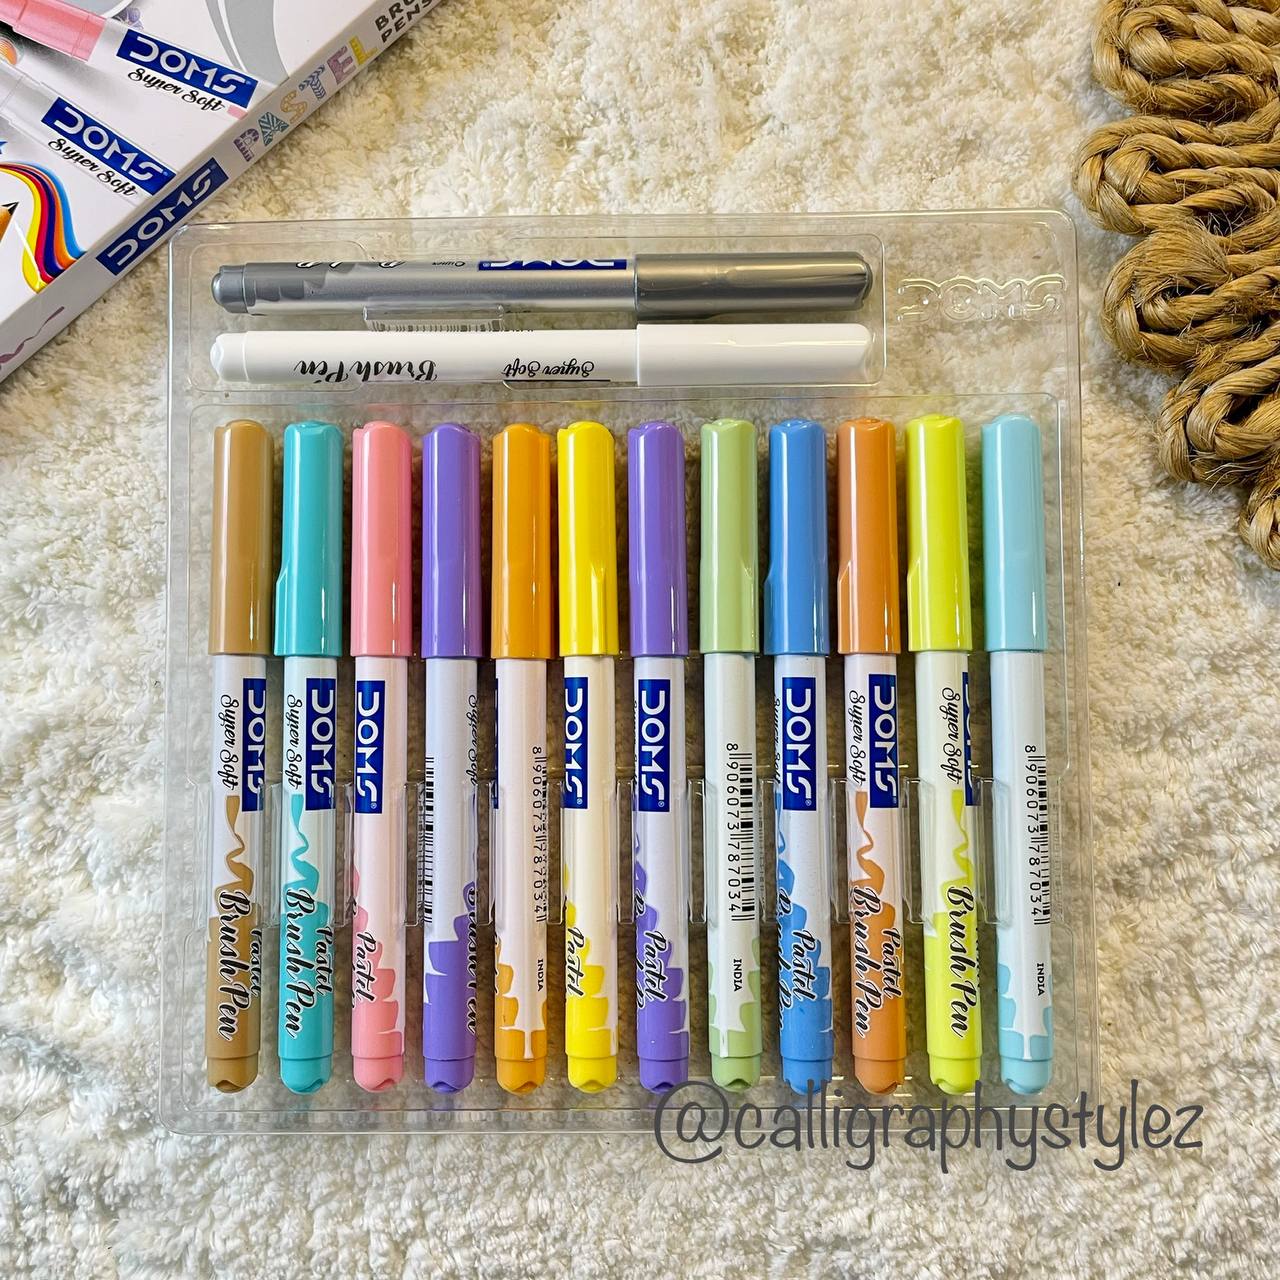 Doms Brush Pen for calligraphy Artist Color Art Pens & Markers-14